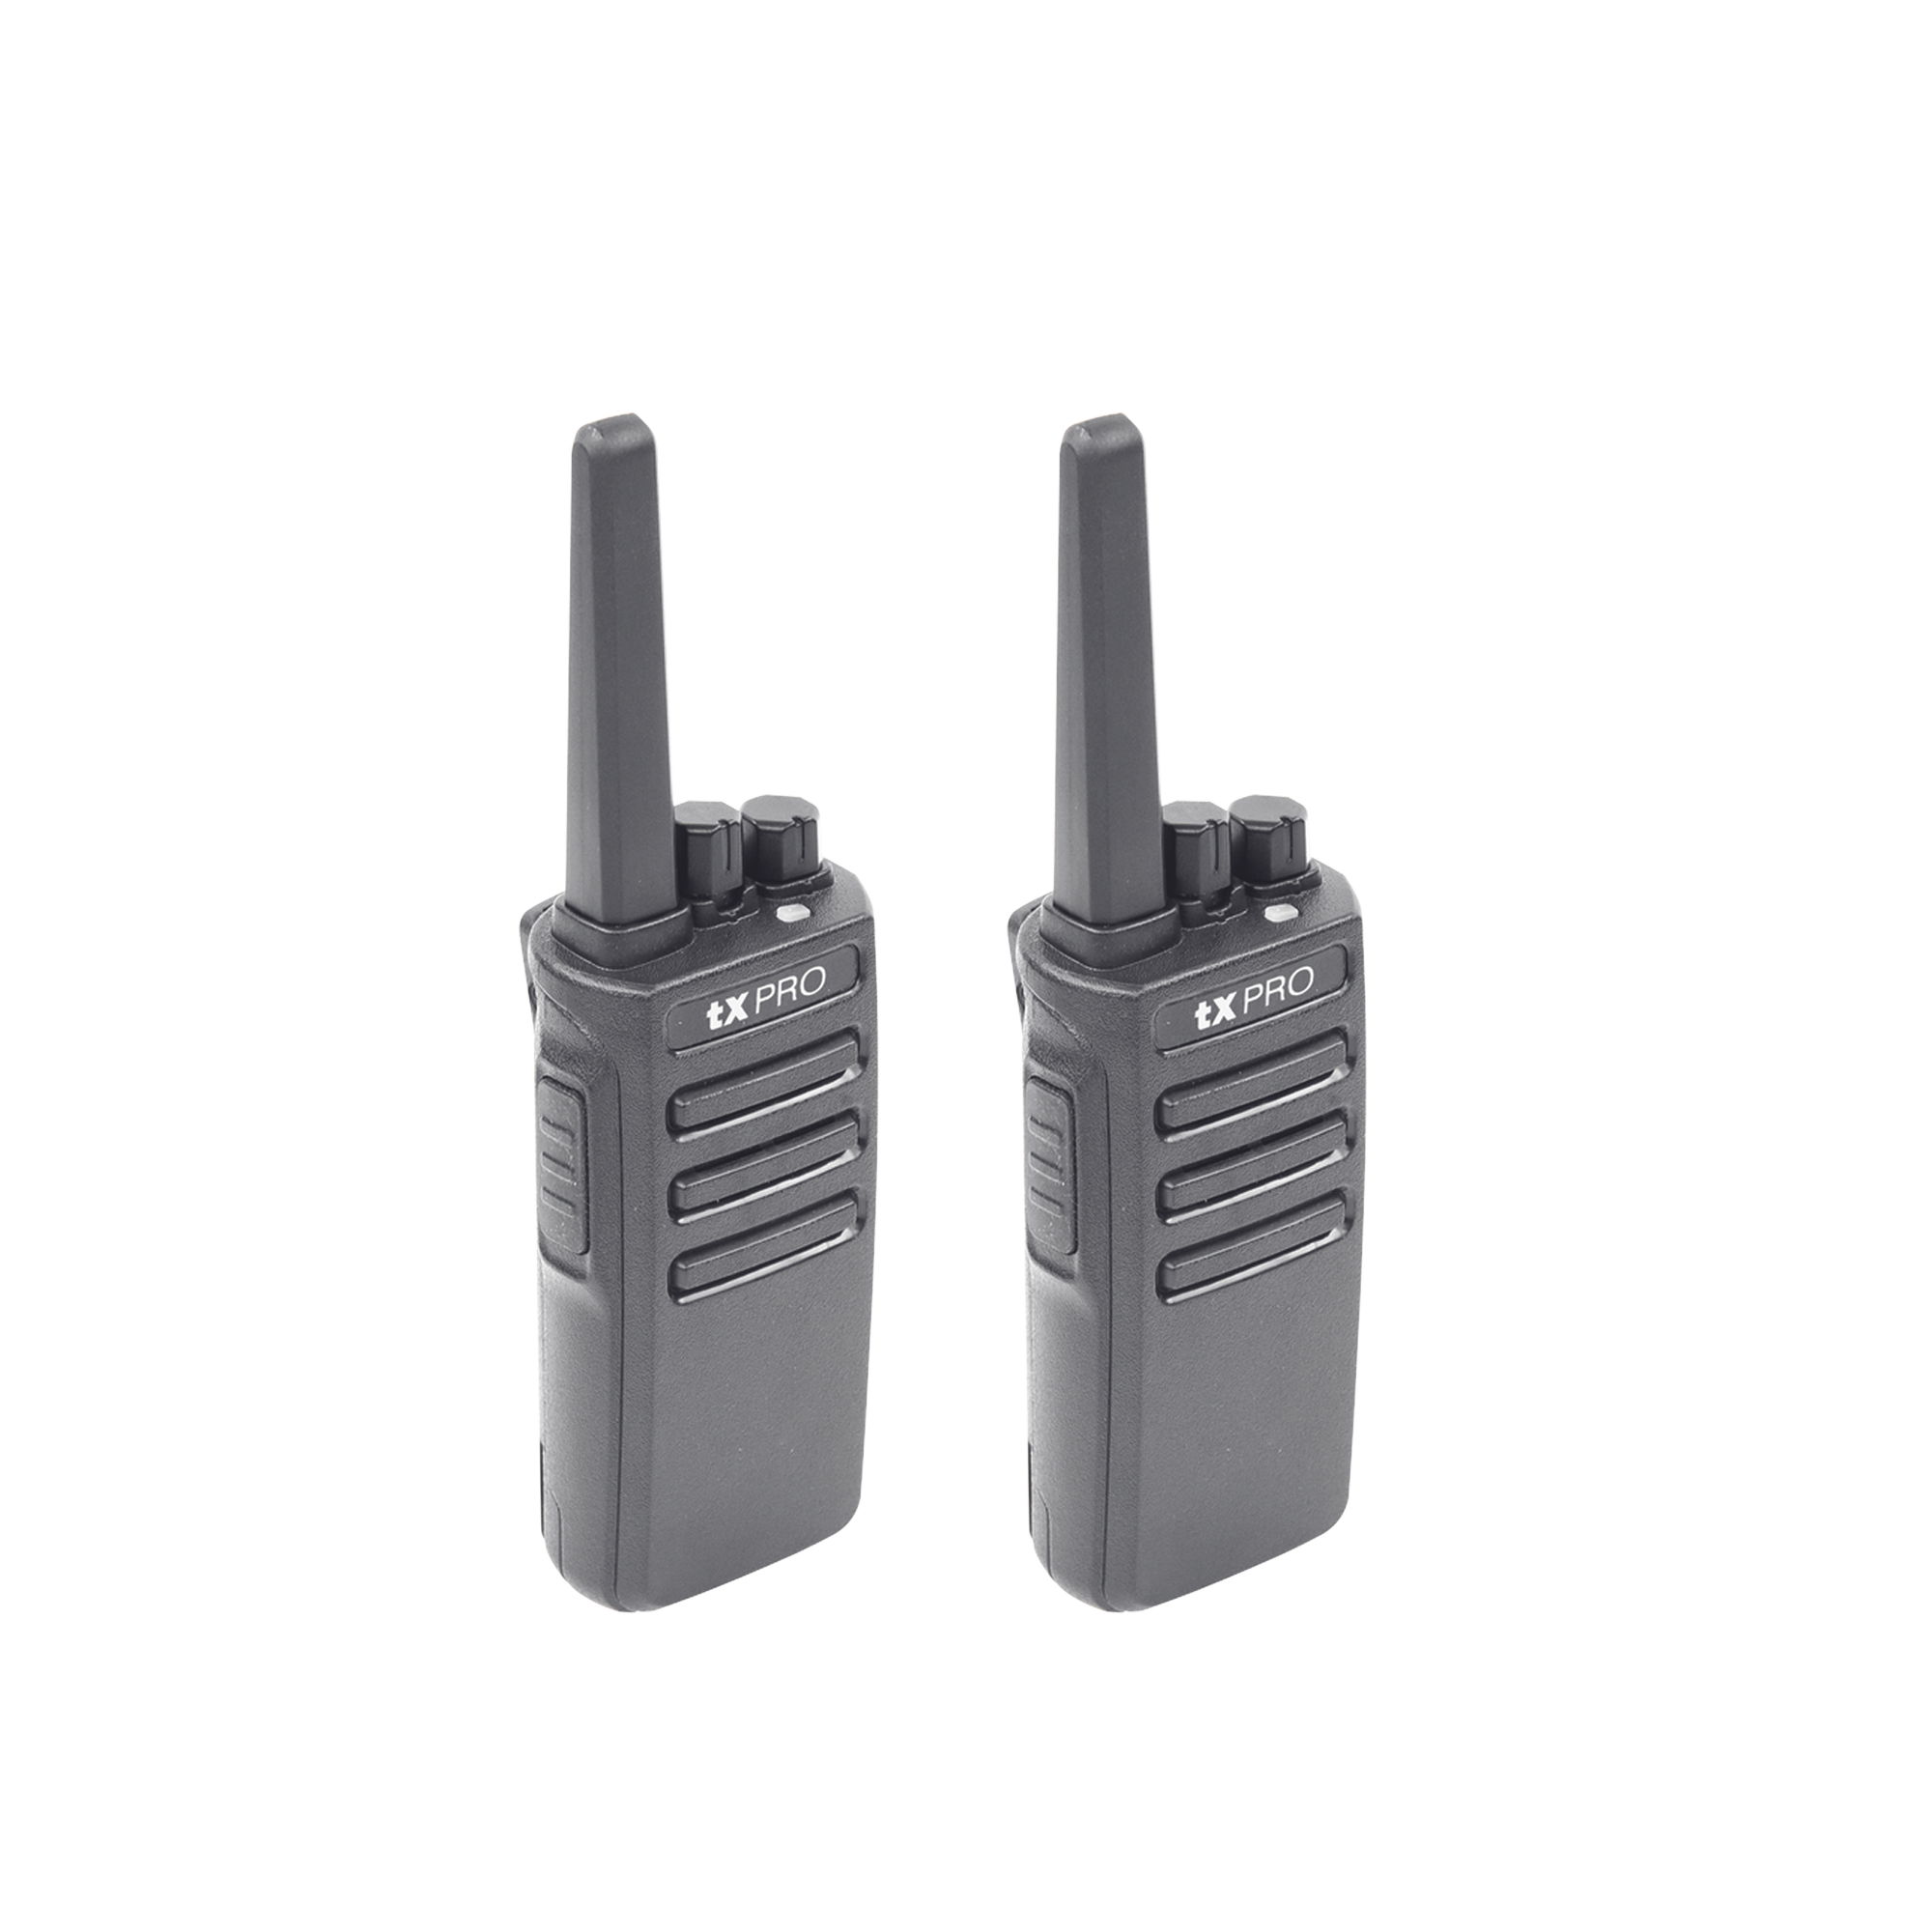 Paquete de 2 radios TX600 UHF (400-470 MHz), 5W de Potencia, Scrambler de Voz, Alta Cobertura